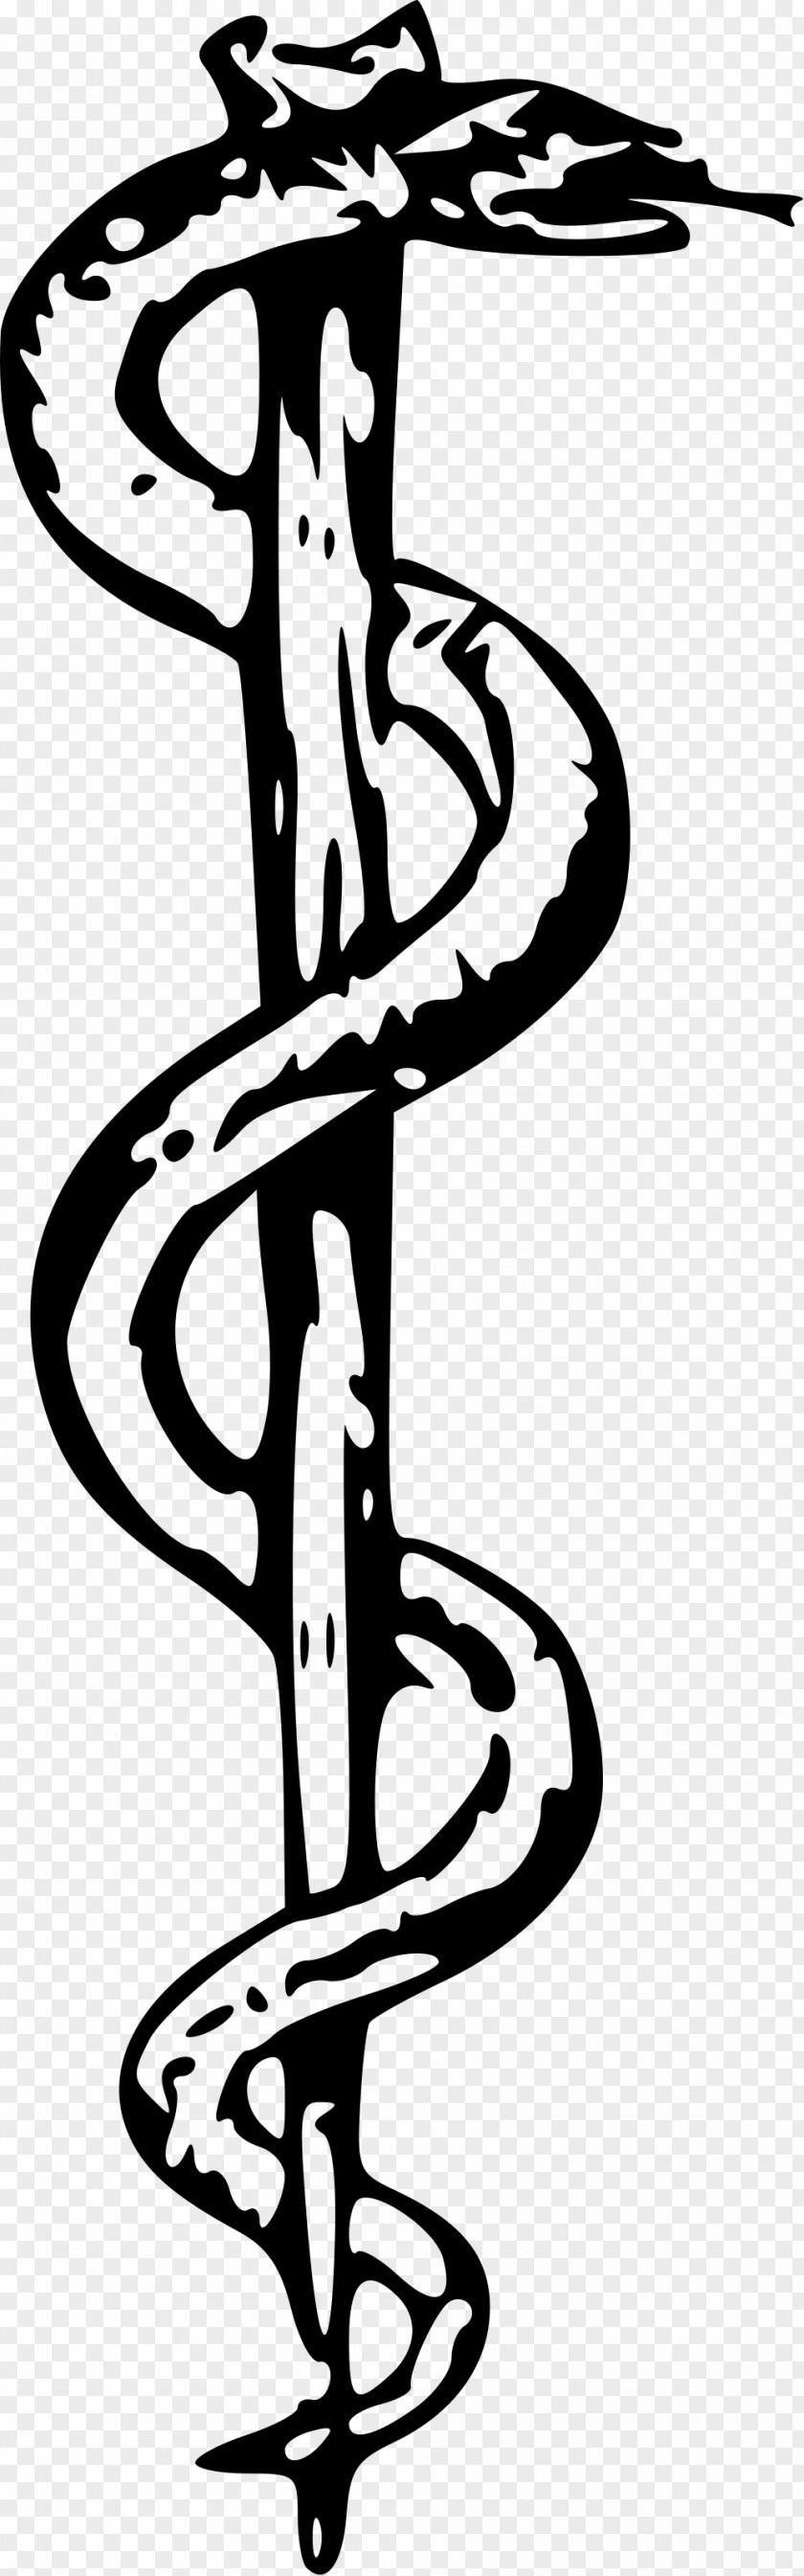 Snake Staff Of Hermes Rod Asclepius Caduceus As A Symbol Medicine PNG